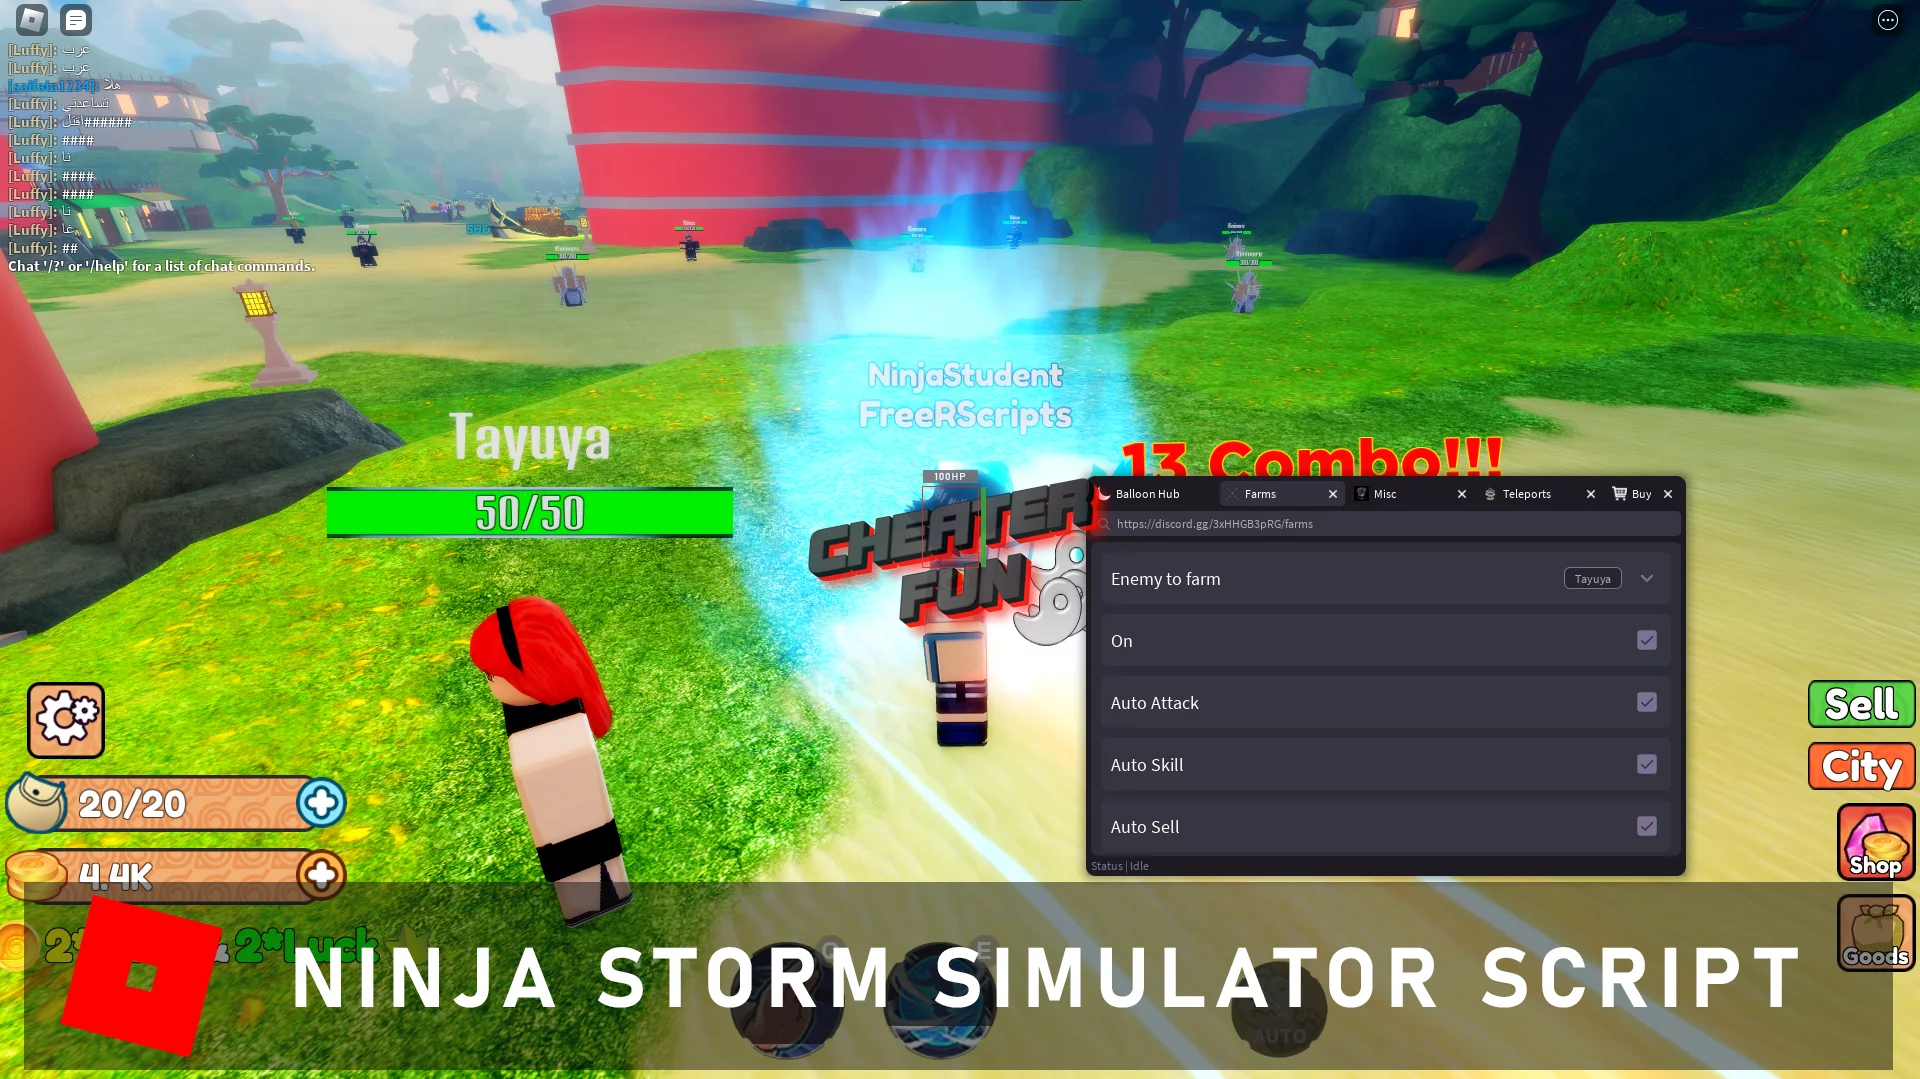 Ninja Storm Simulator Scripts, Hacks - Auto Attack, Auto Skill